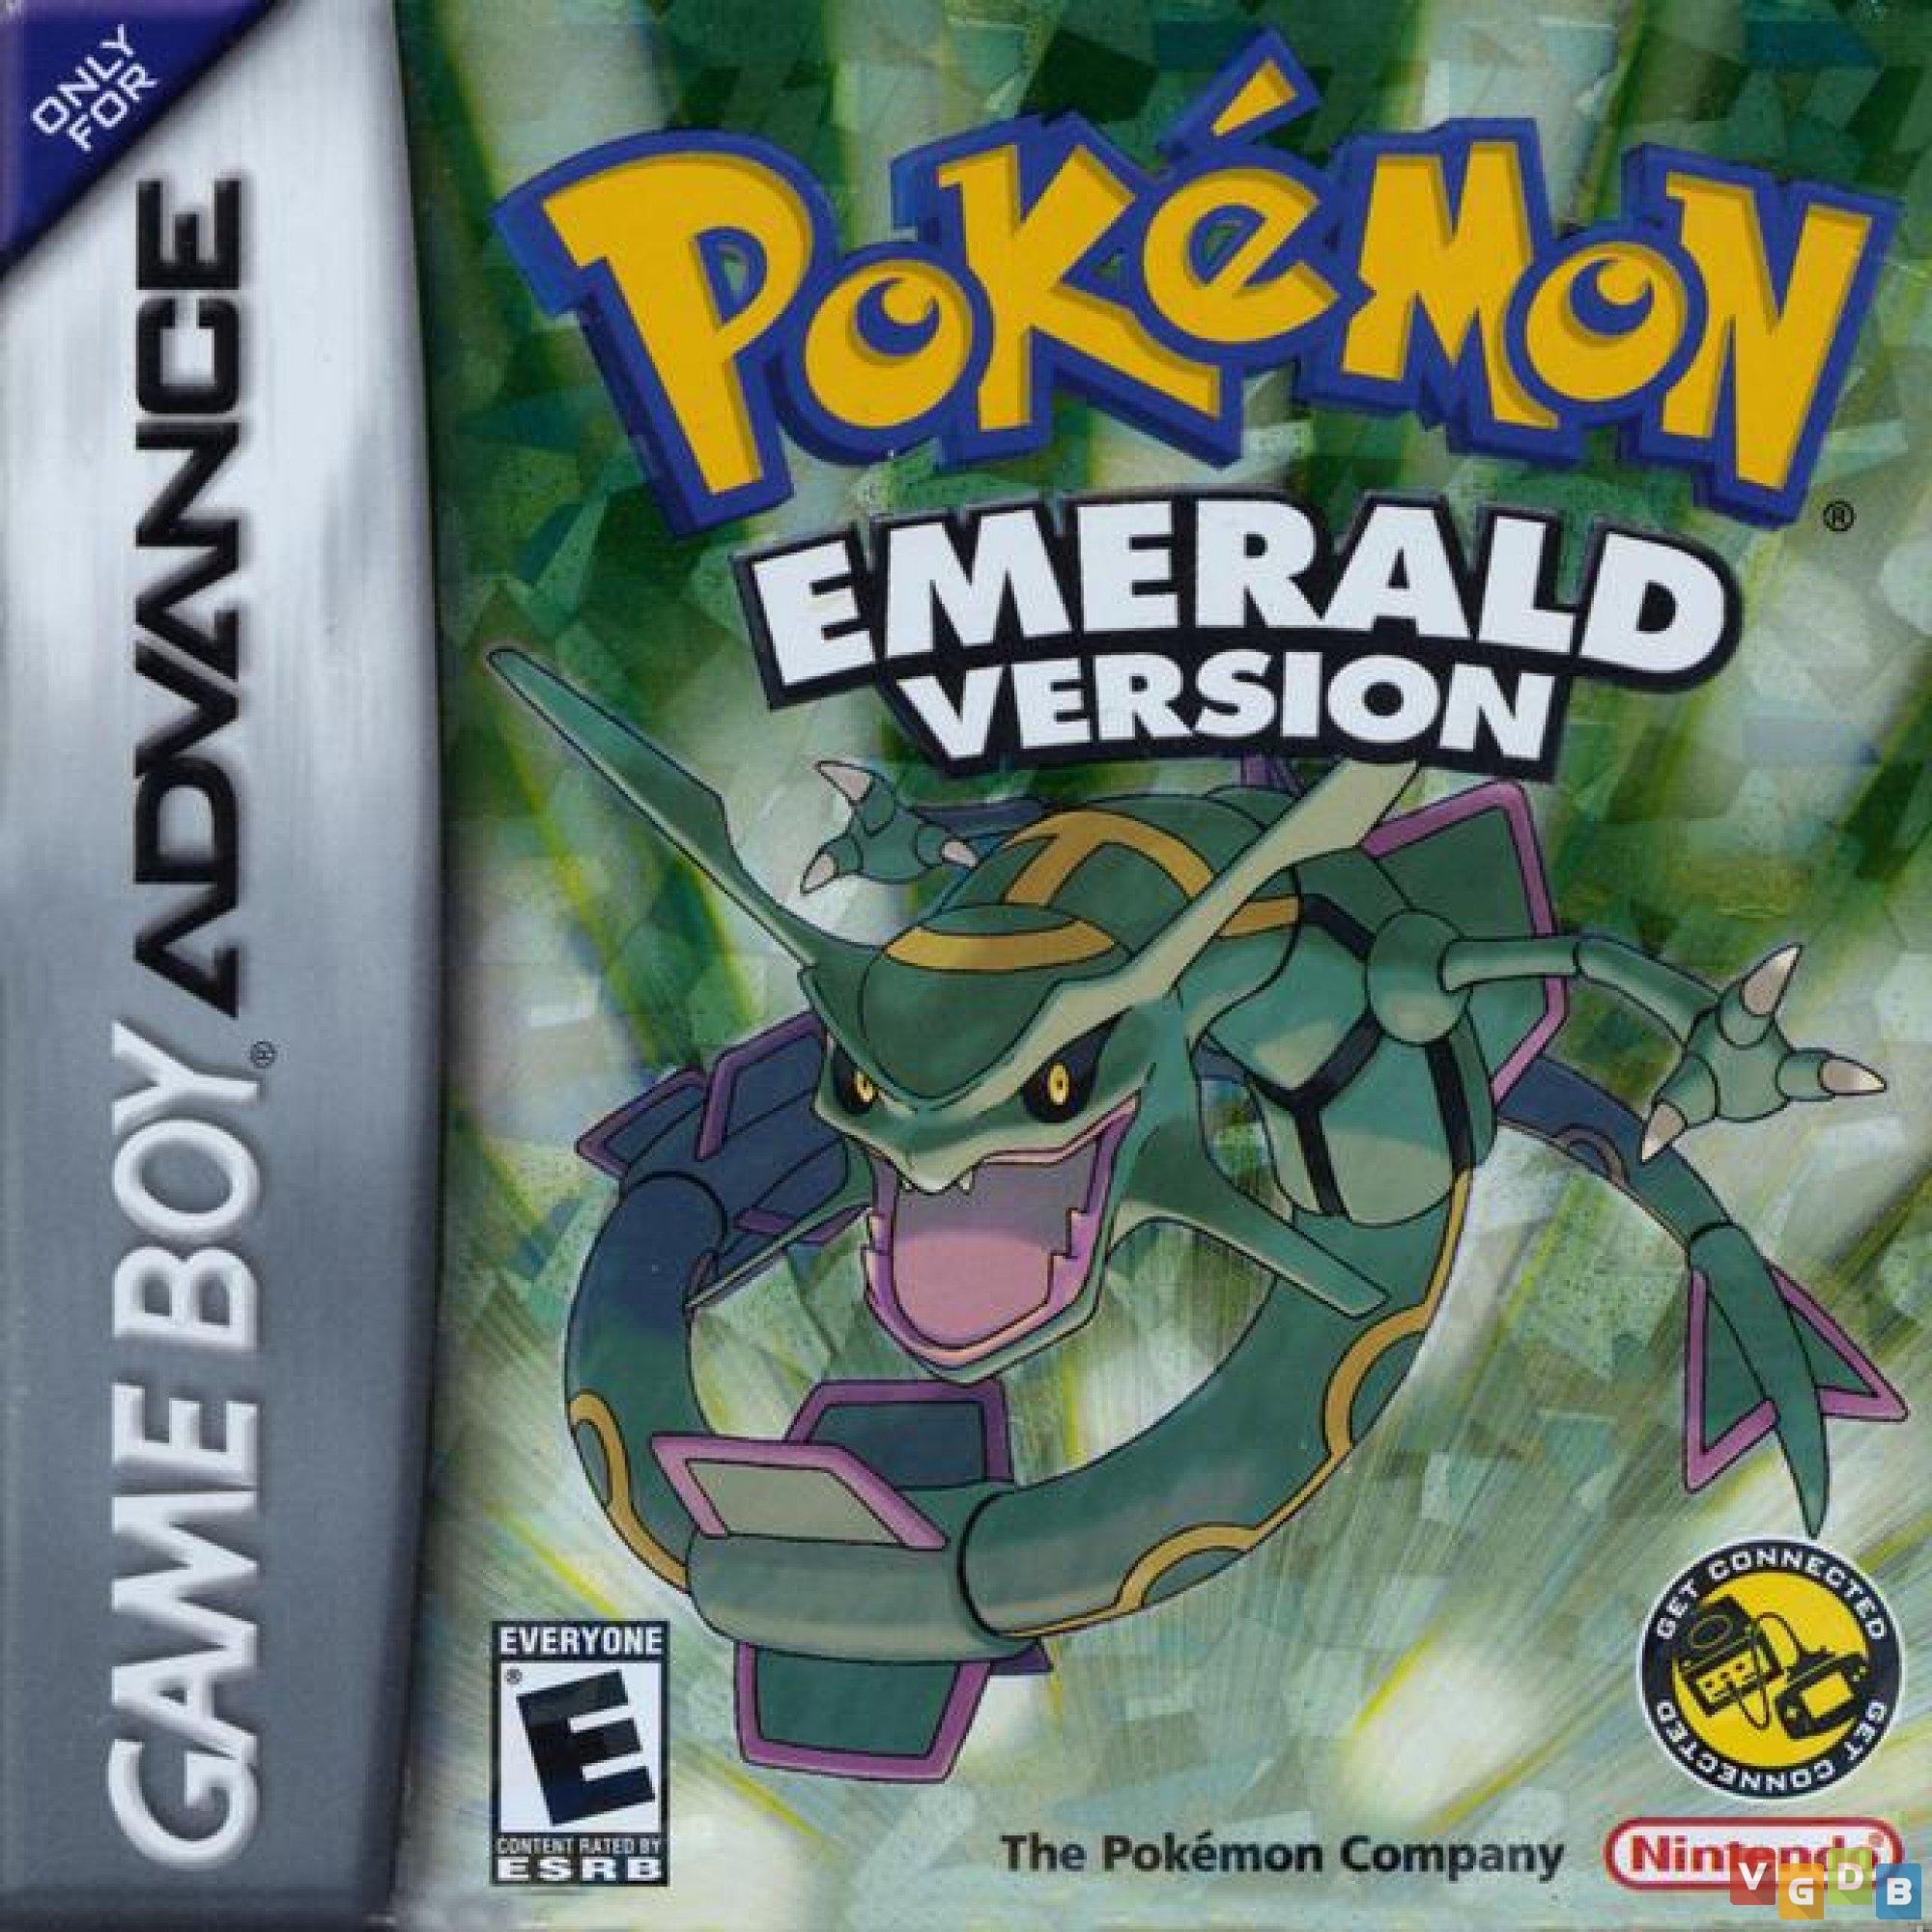 Pokemon Emerald do GBA original Americana 386 Pokedex